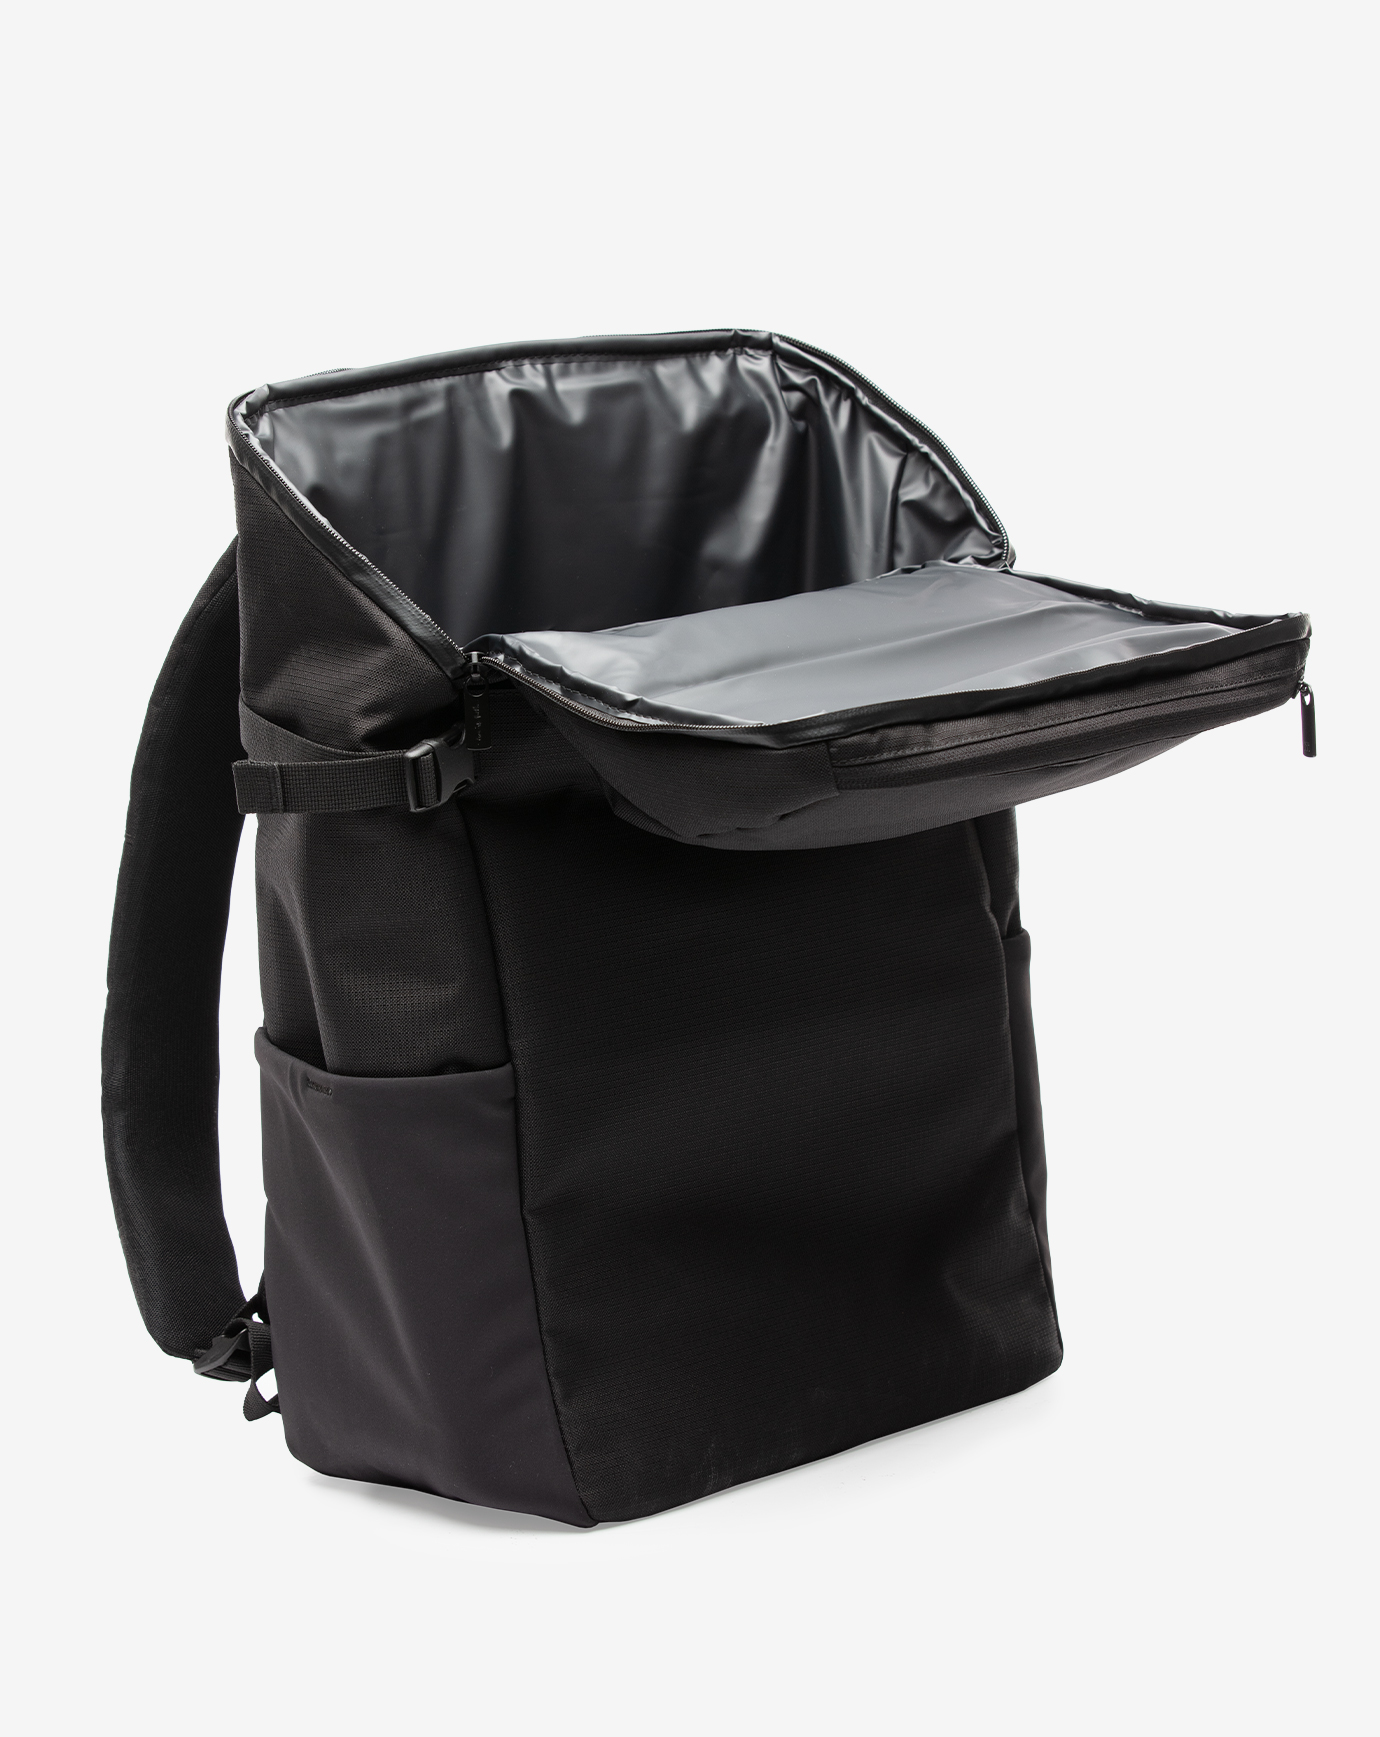 Buy Fila Backpack, Black, 12 Online India